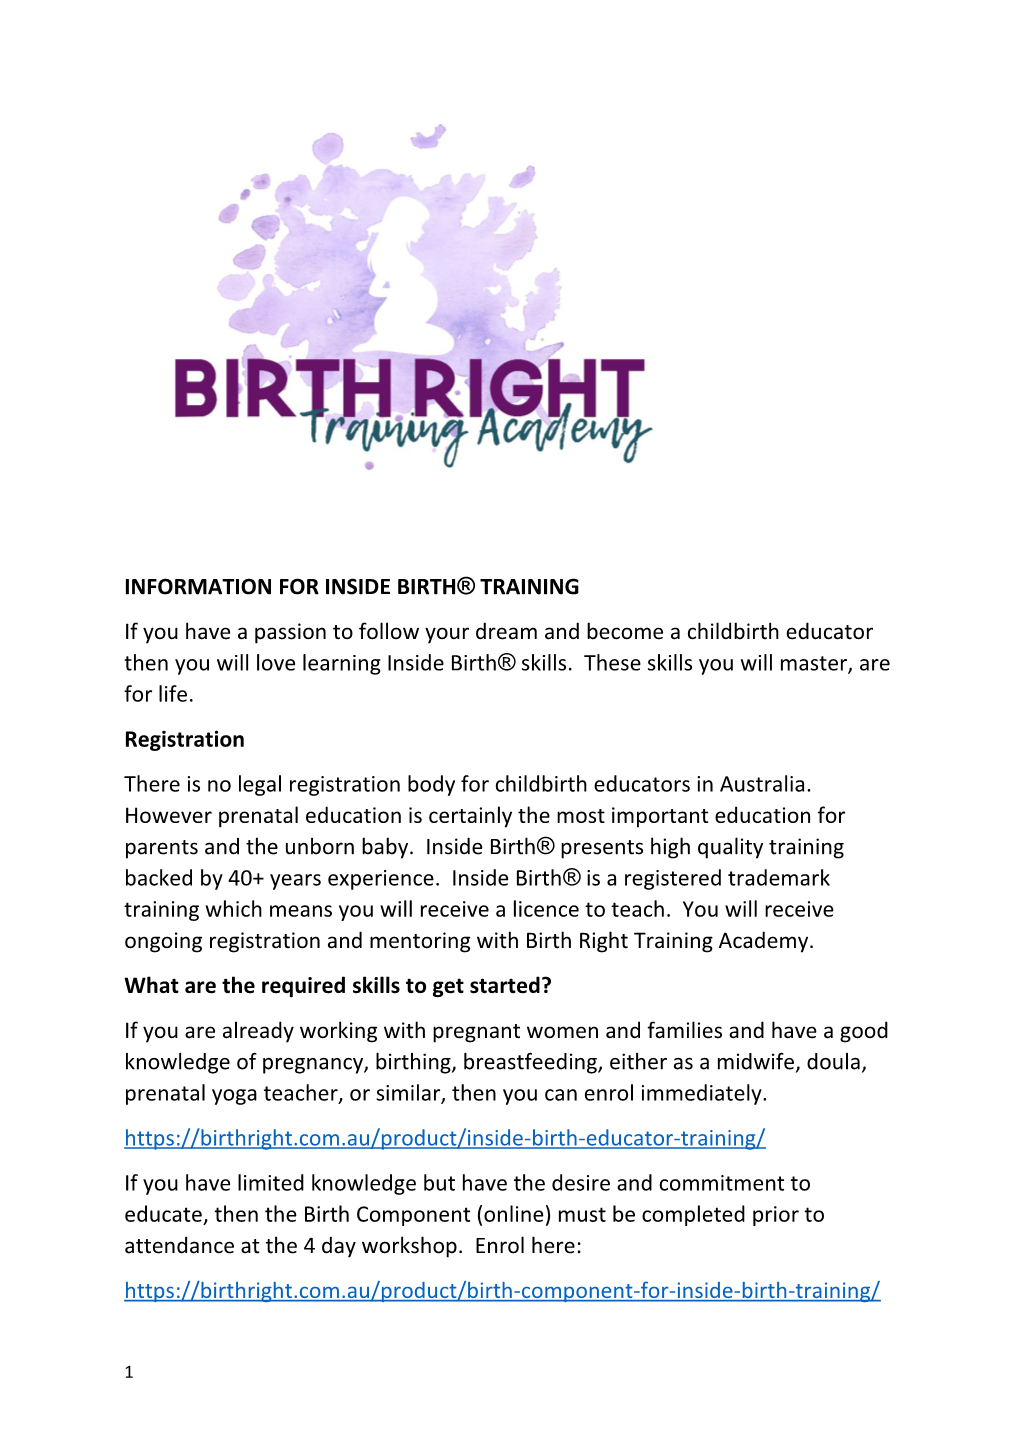 Information for Inside Birth Training